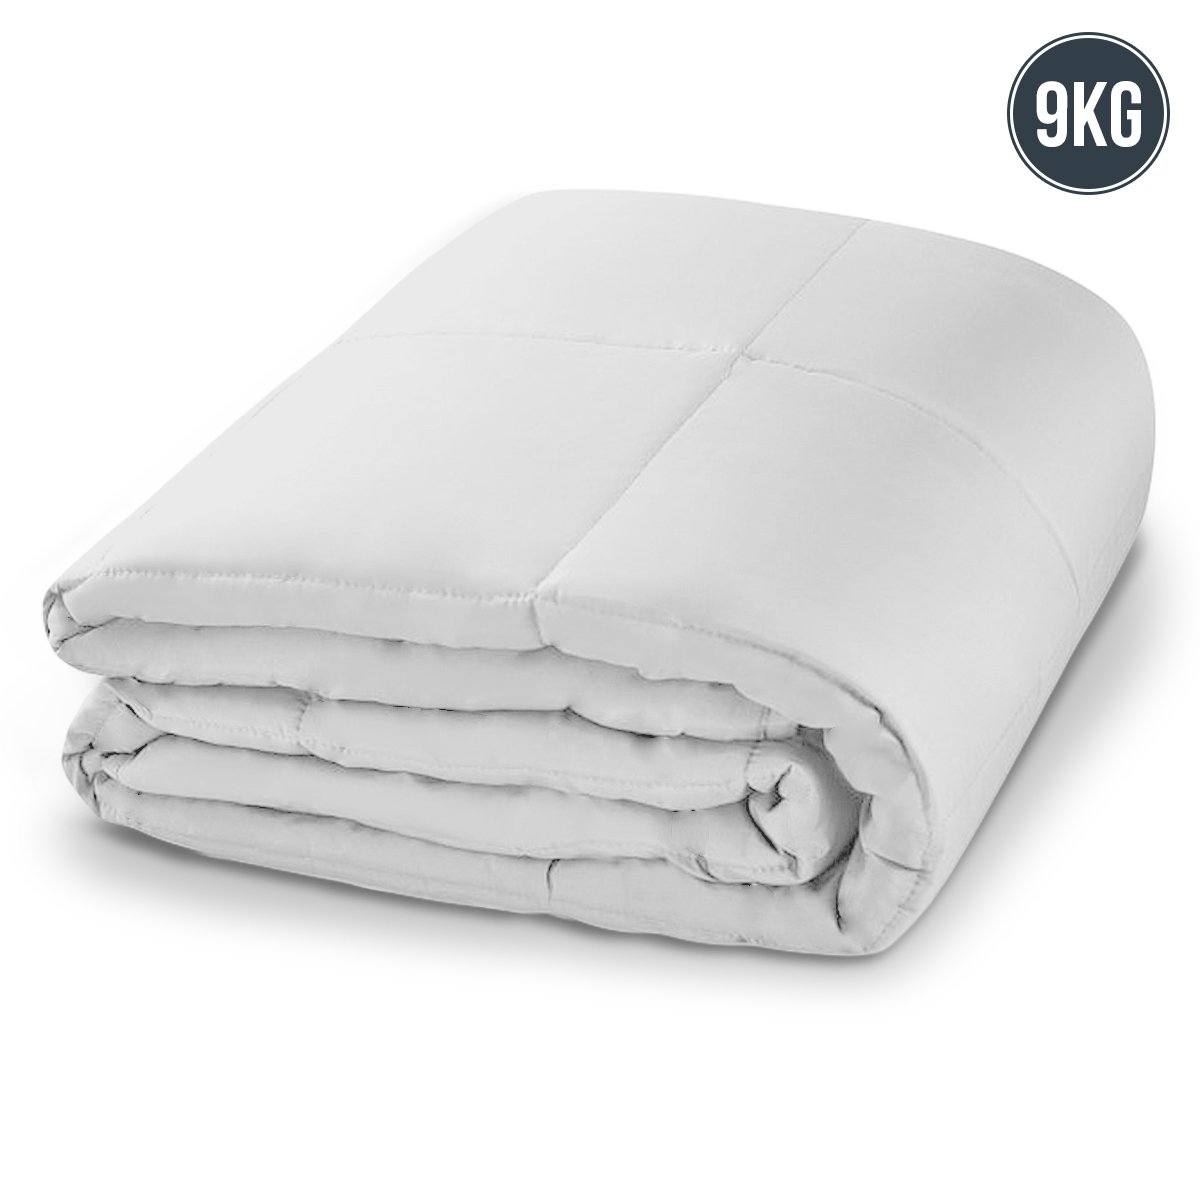 Laura Hill Weighted Blanket Heavy Quilt Doona Queen 9Kg -White 1